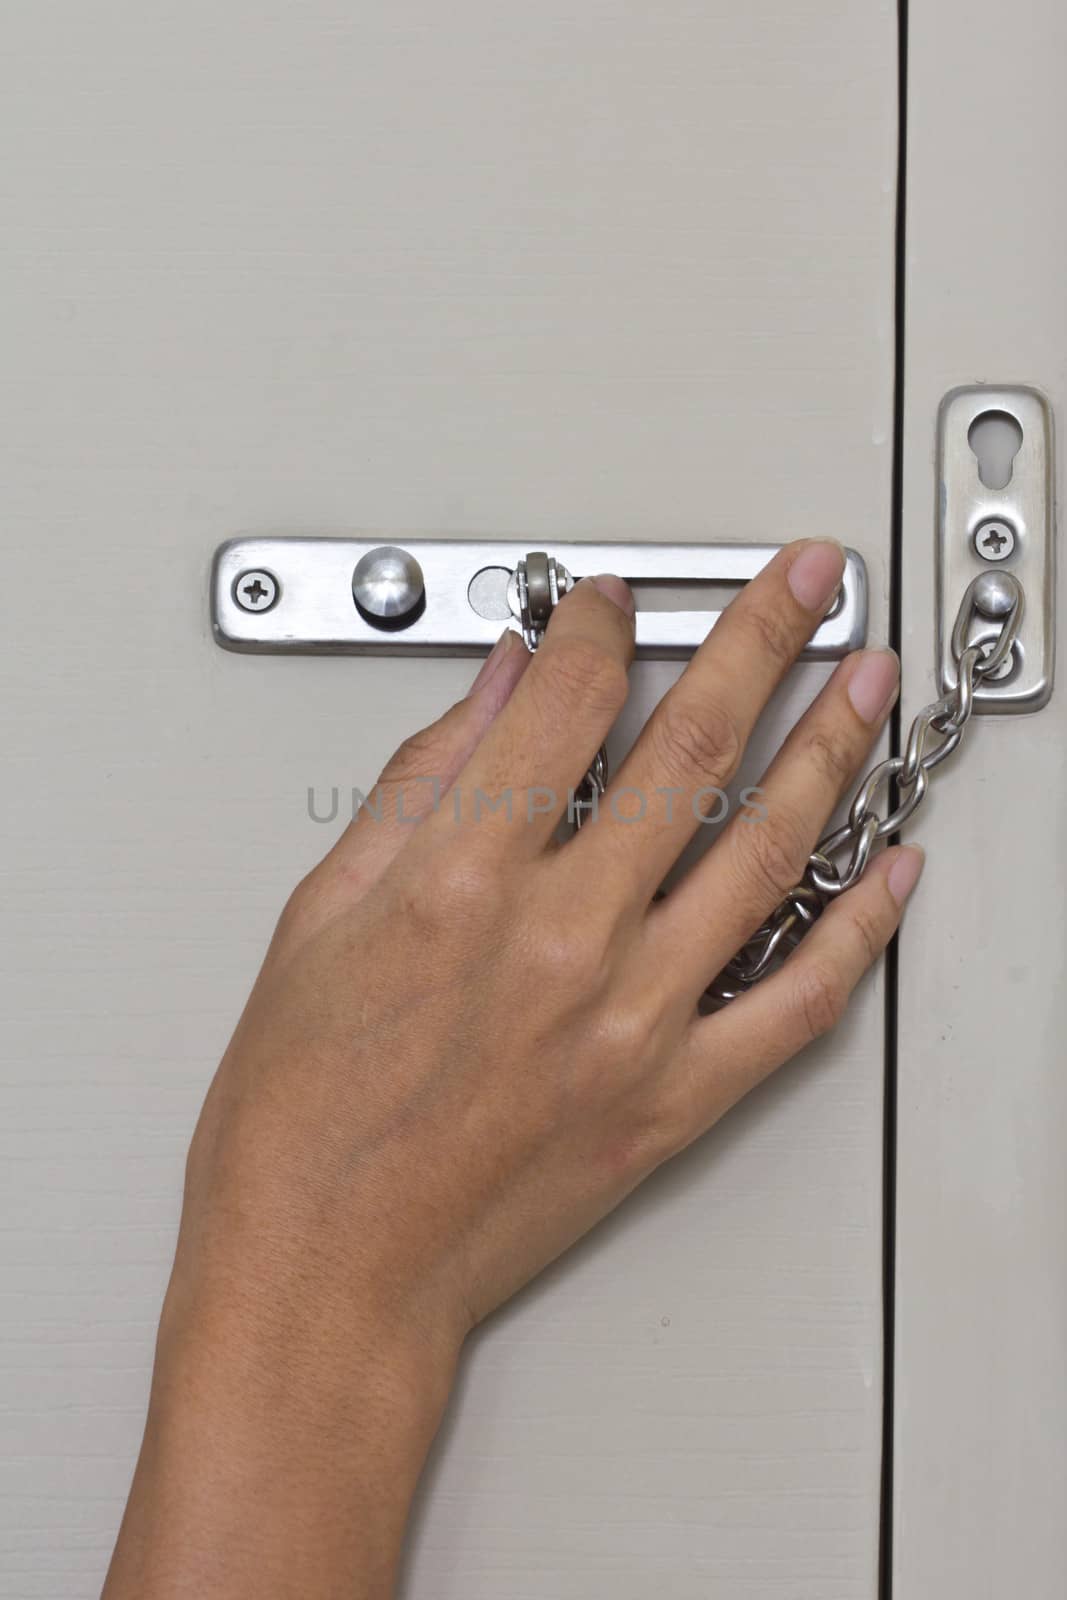 Locking up or unlocking door with hinge in hand